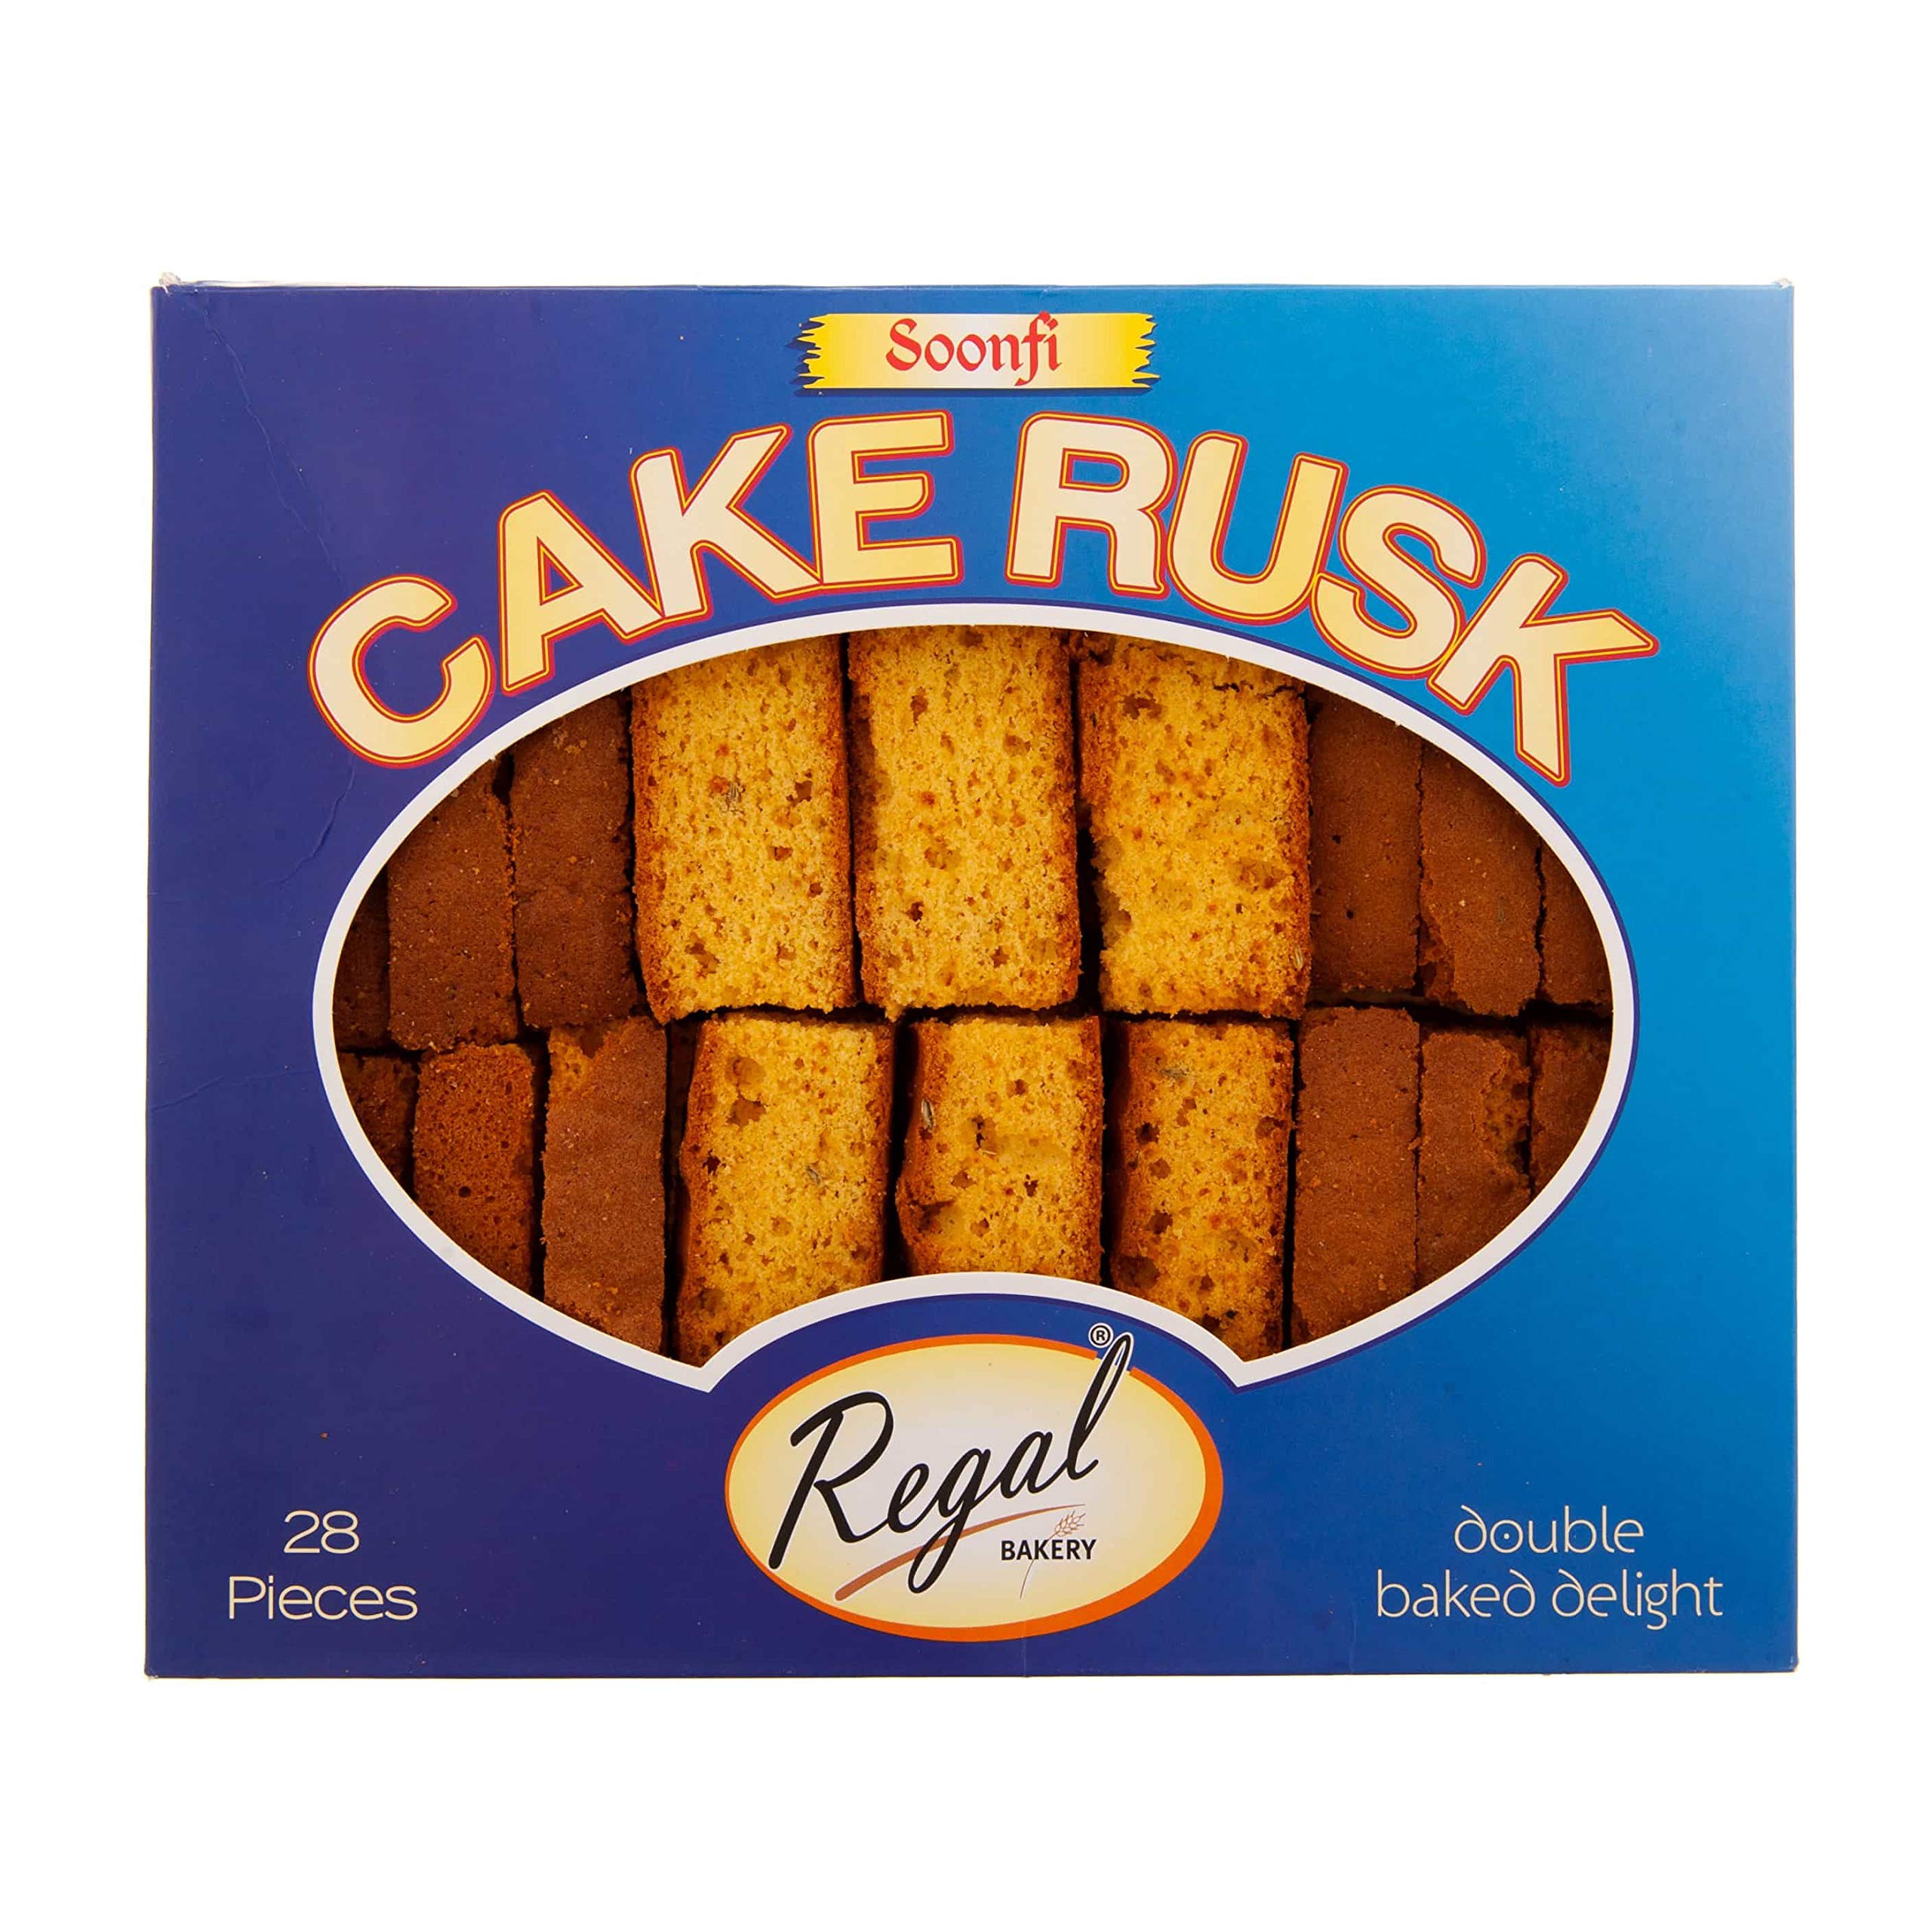 Regal Soonfi Cake Rusk 9x28PCS